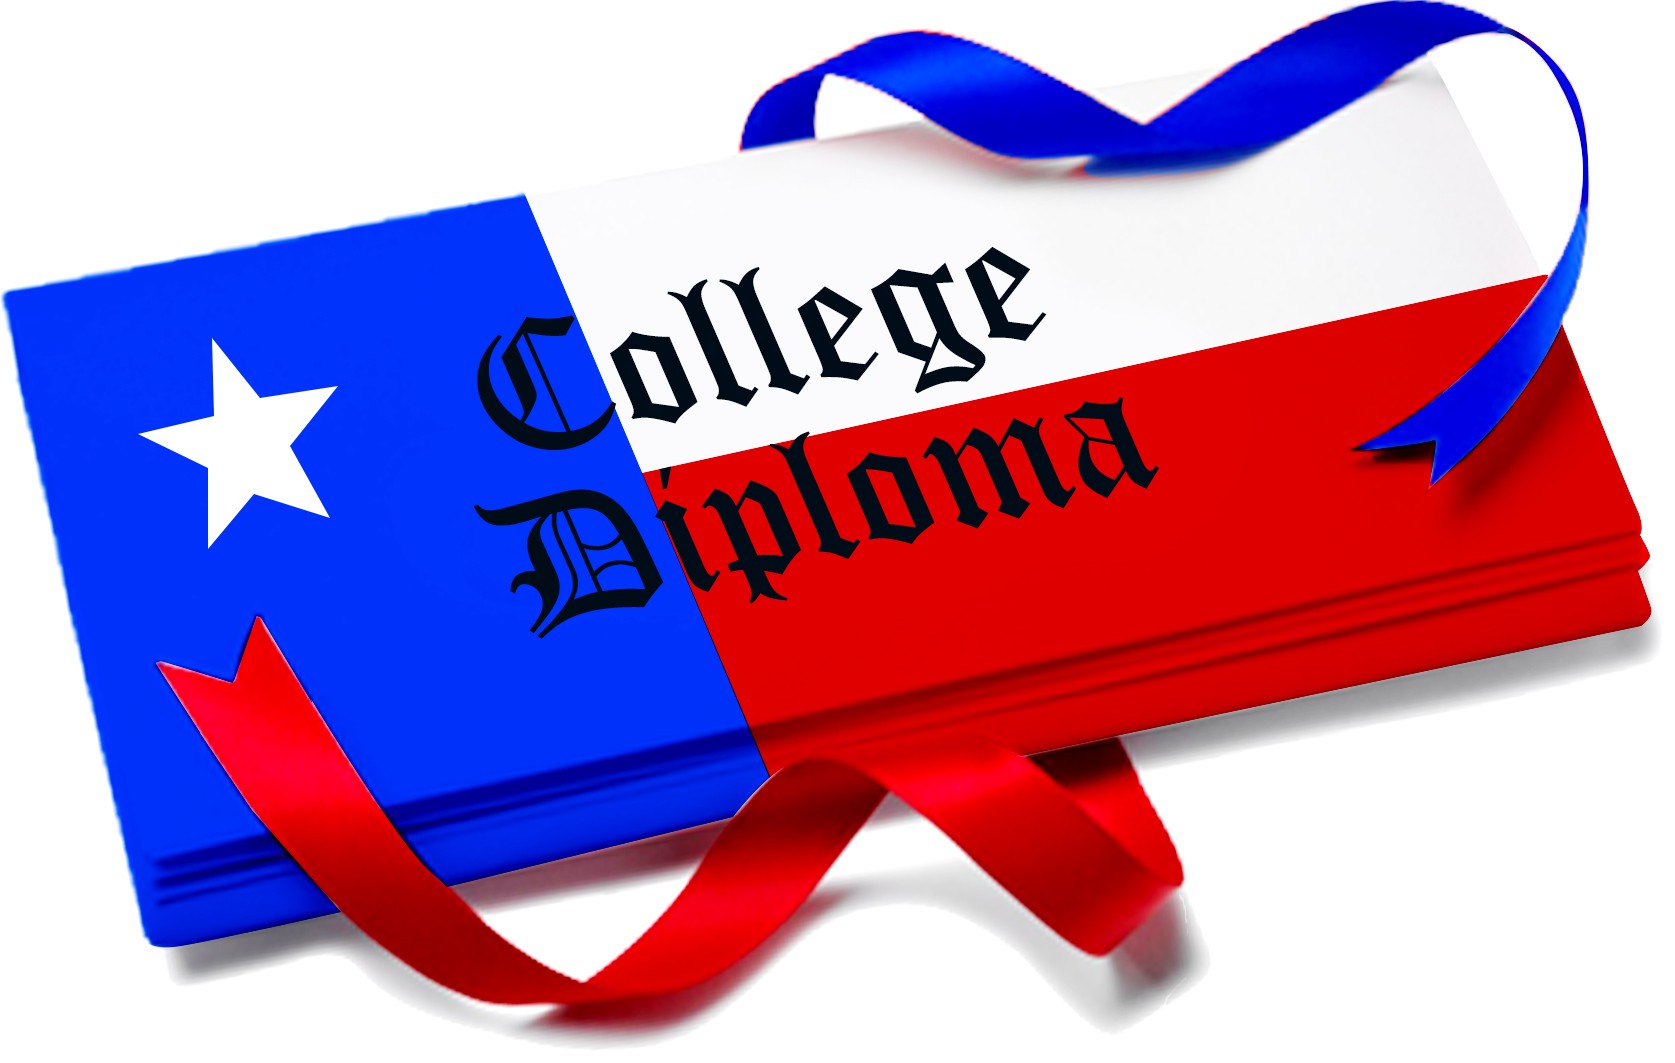 Houston Graduate School of Theology College Diploma